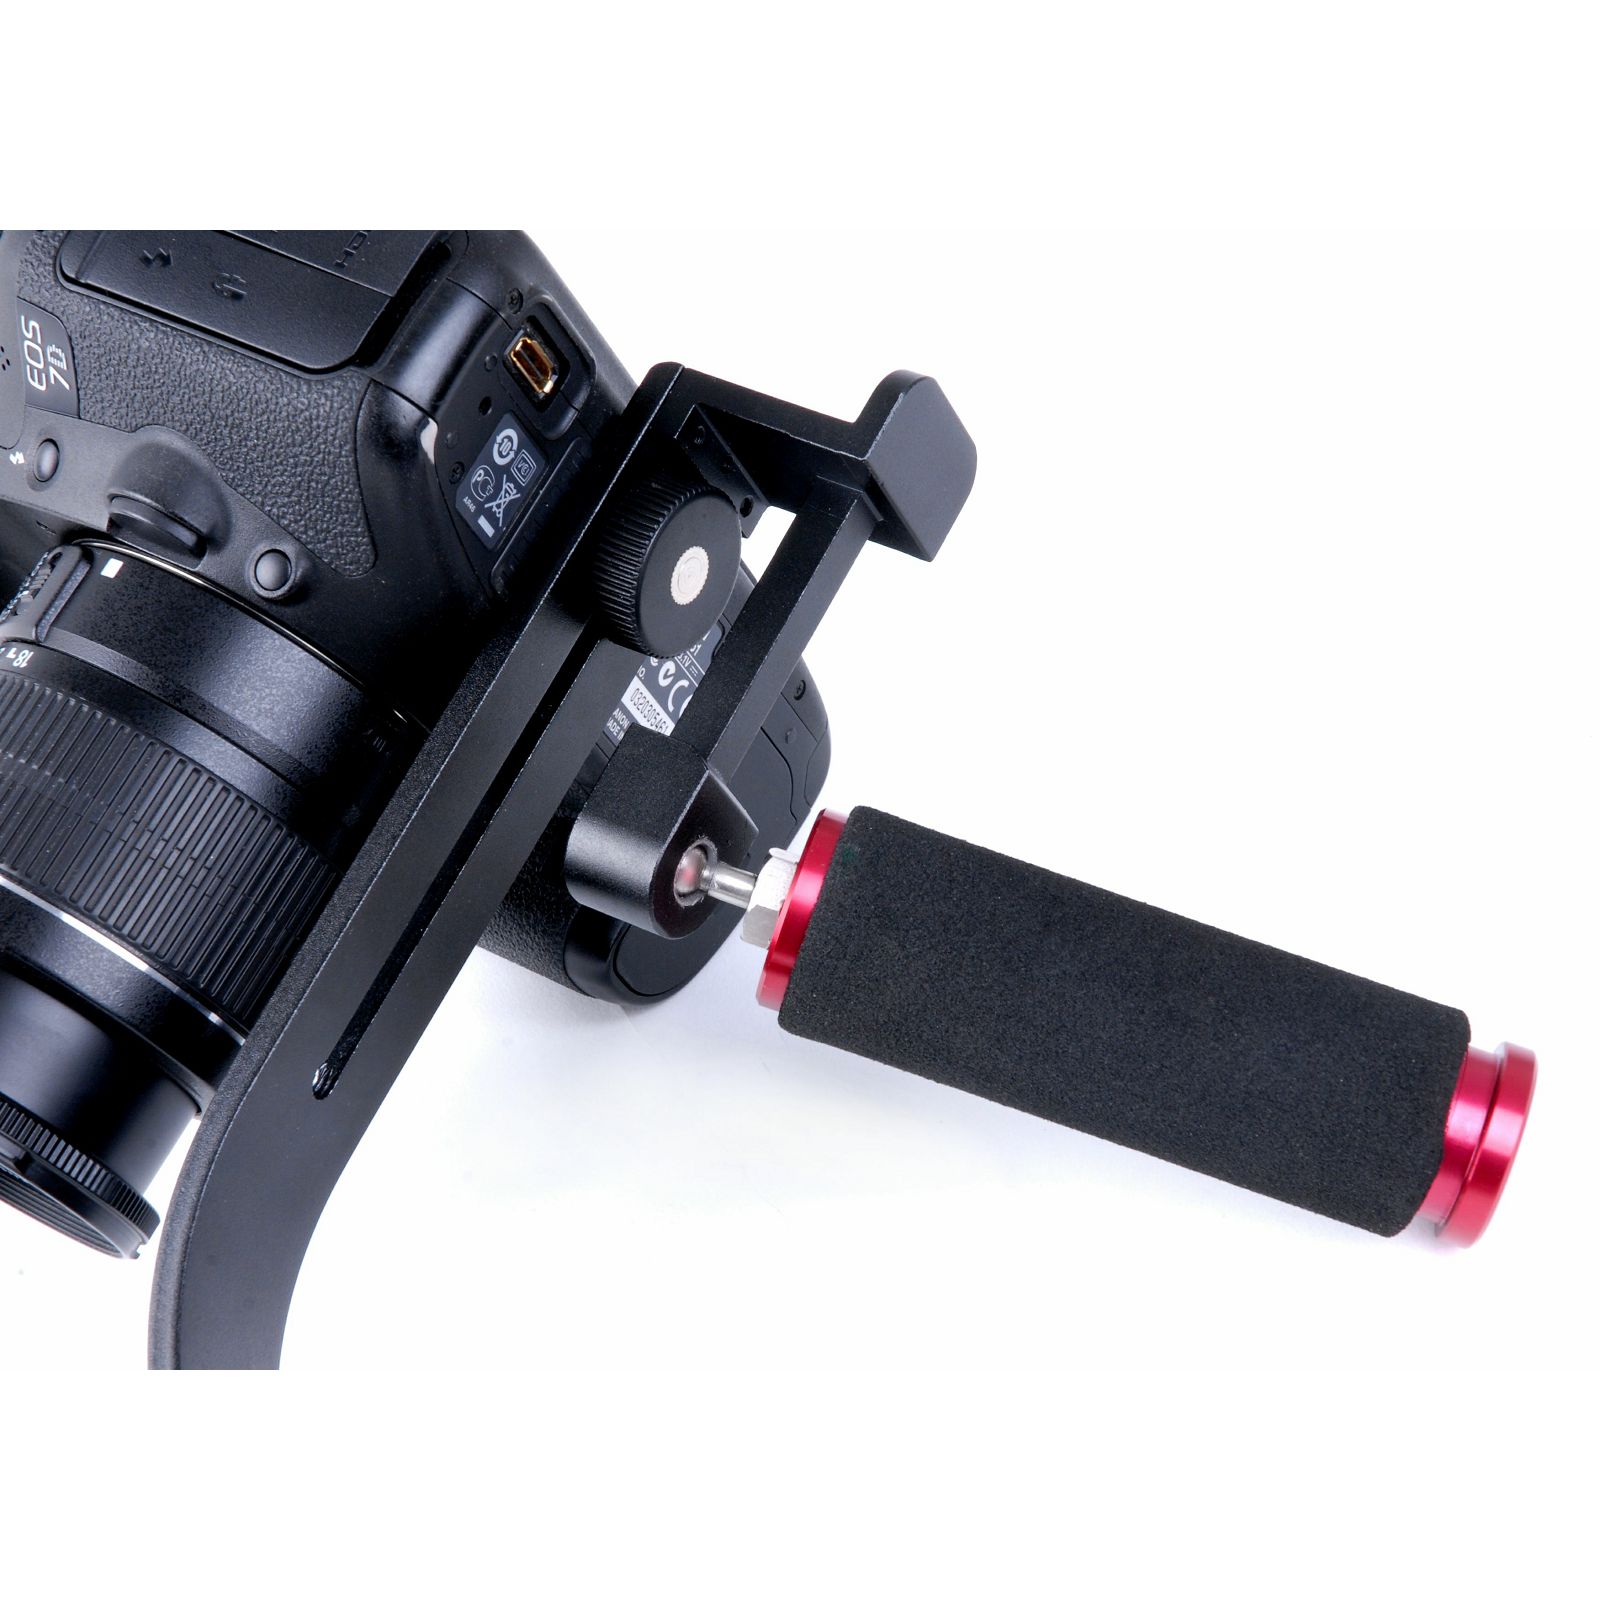 Sevenoak Camera Stabilizer SK-W02 SteadyCam stabilizator DSLR fotoaparata i kamere do 1kg za video snimanje s utegom